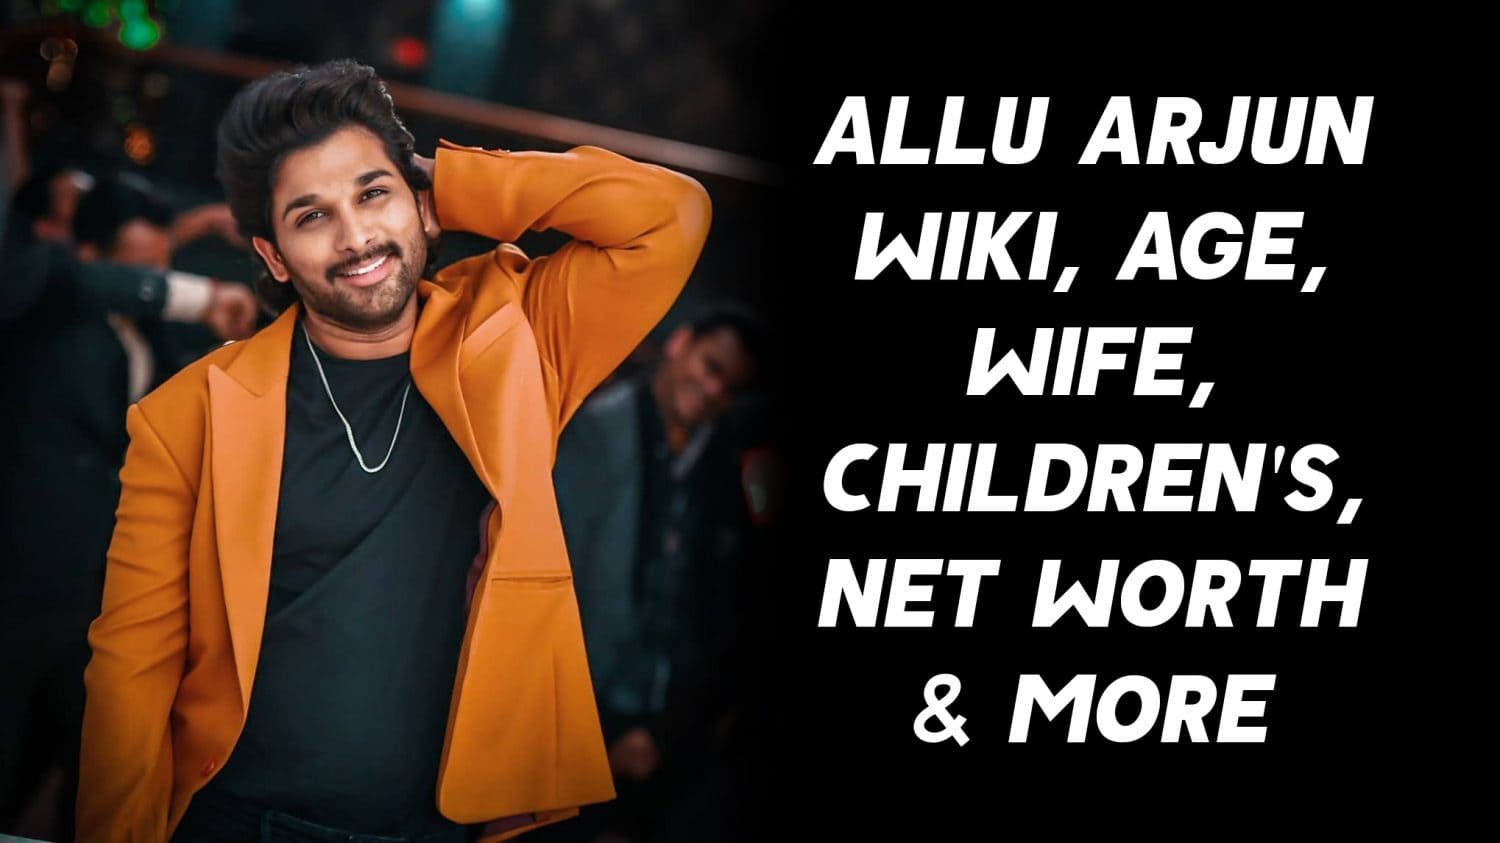 Allu Arjun Wiki, Age, Wife, Children's, Net Worth & More 1